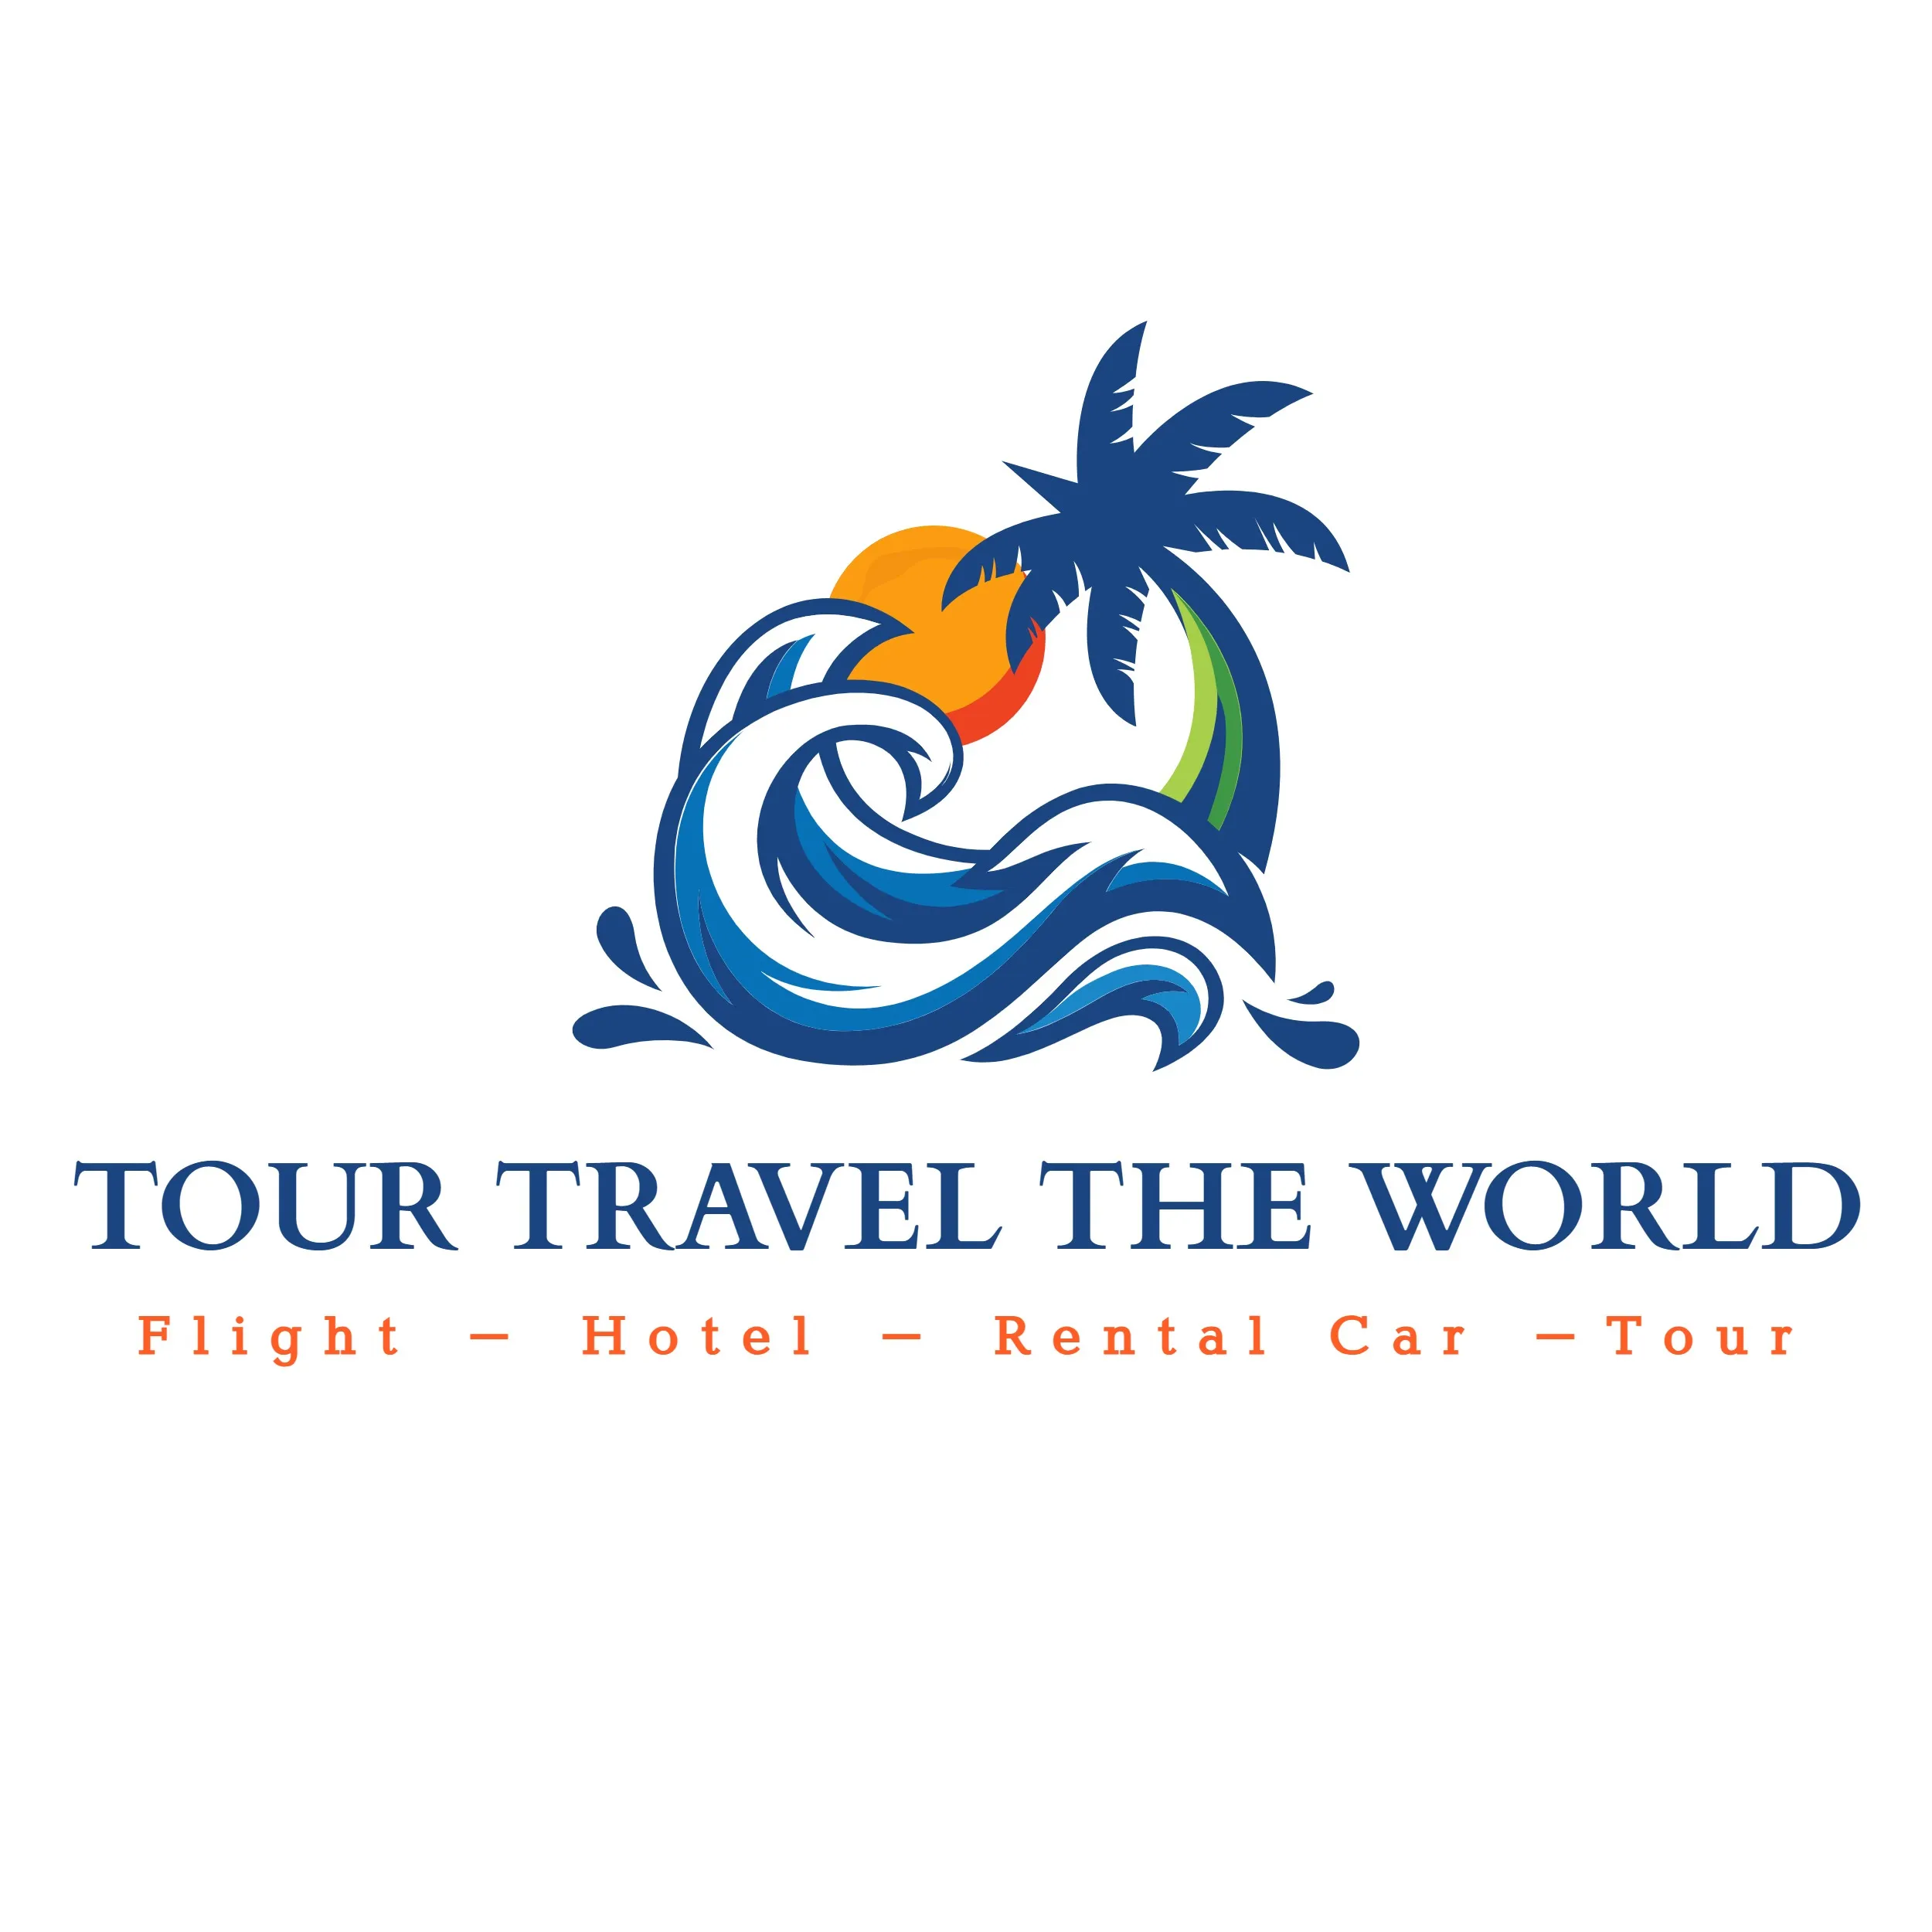 Tour Travel The World 